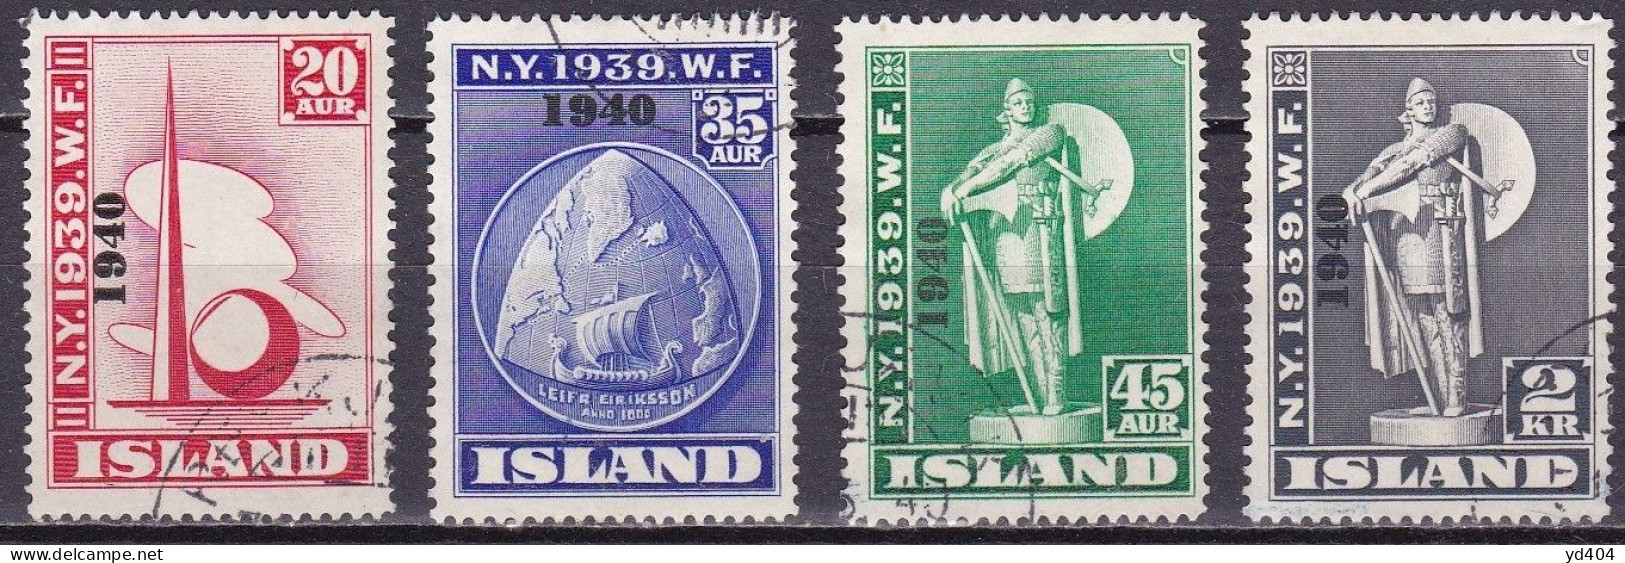 IS041 – ISLANDE – ICELAND – 1940 – NEW-YORK WORLD FAIR OVERP.– SG # 257/60 USED 680 € - Usati